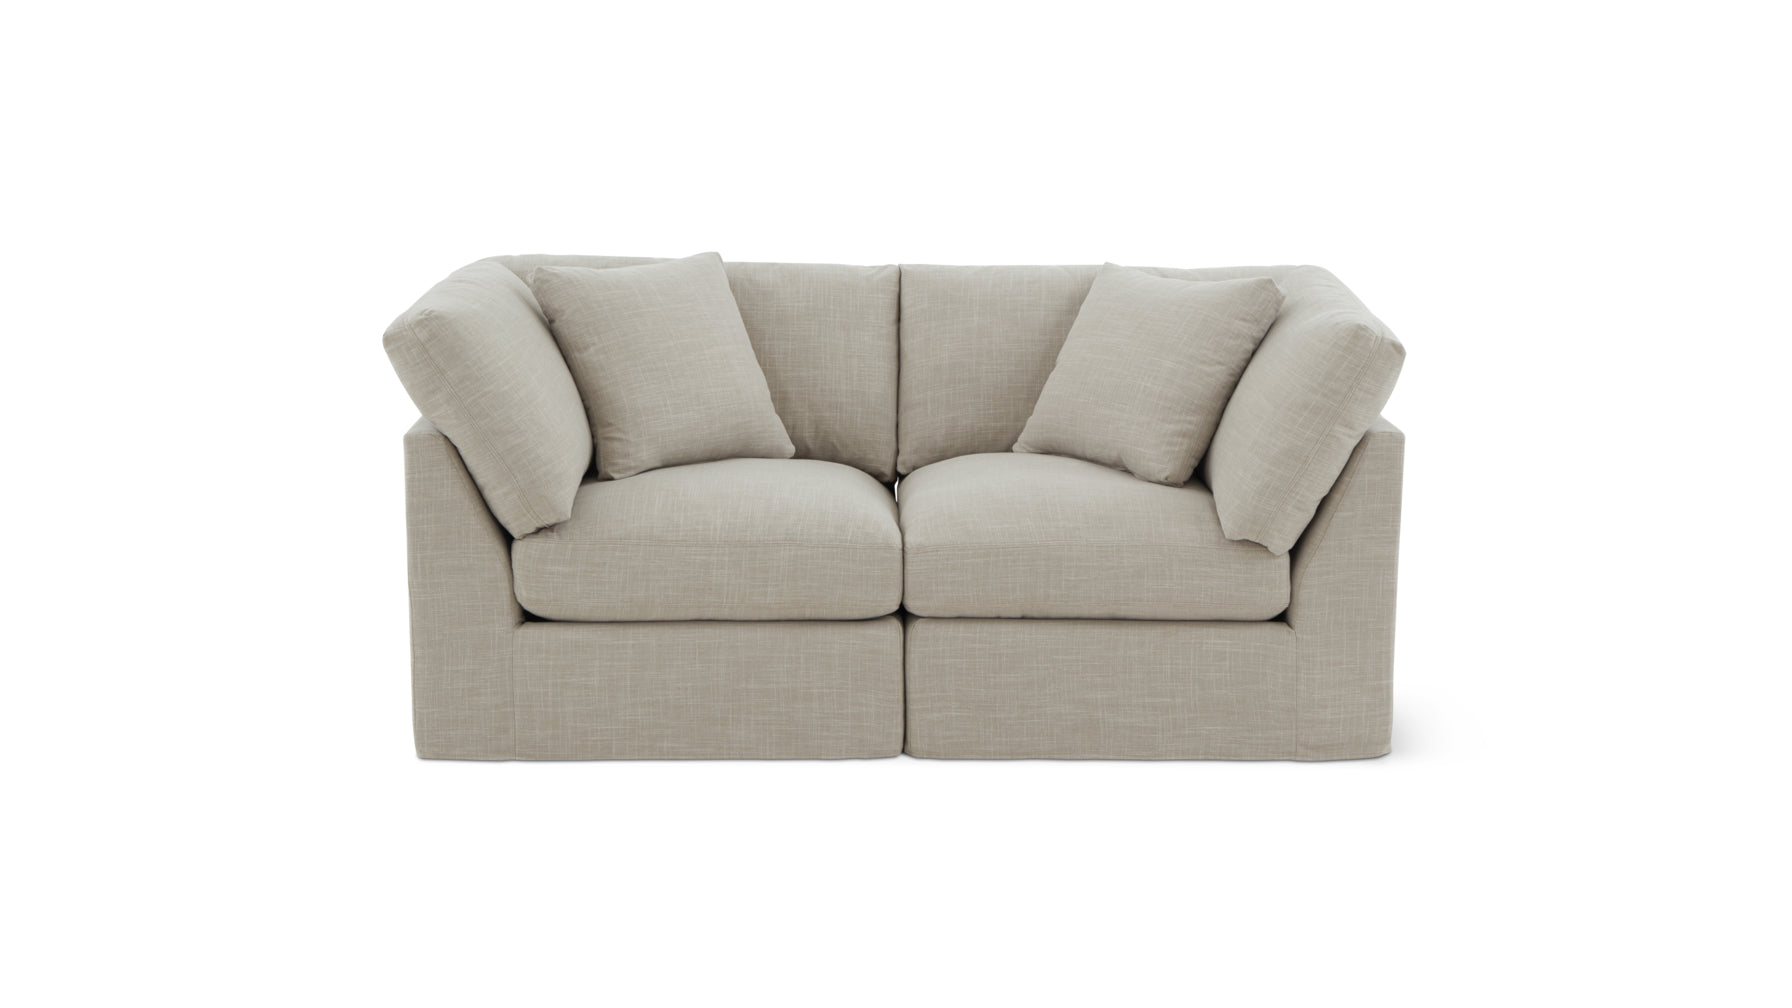 Get Together™ 2-Piece Modular Sofa, Standard, Light Pebble - Image 1